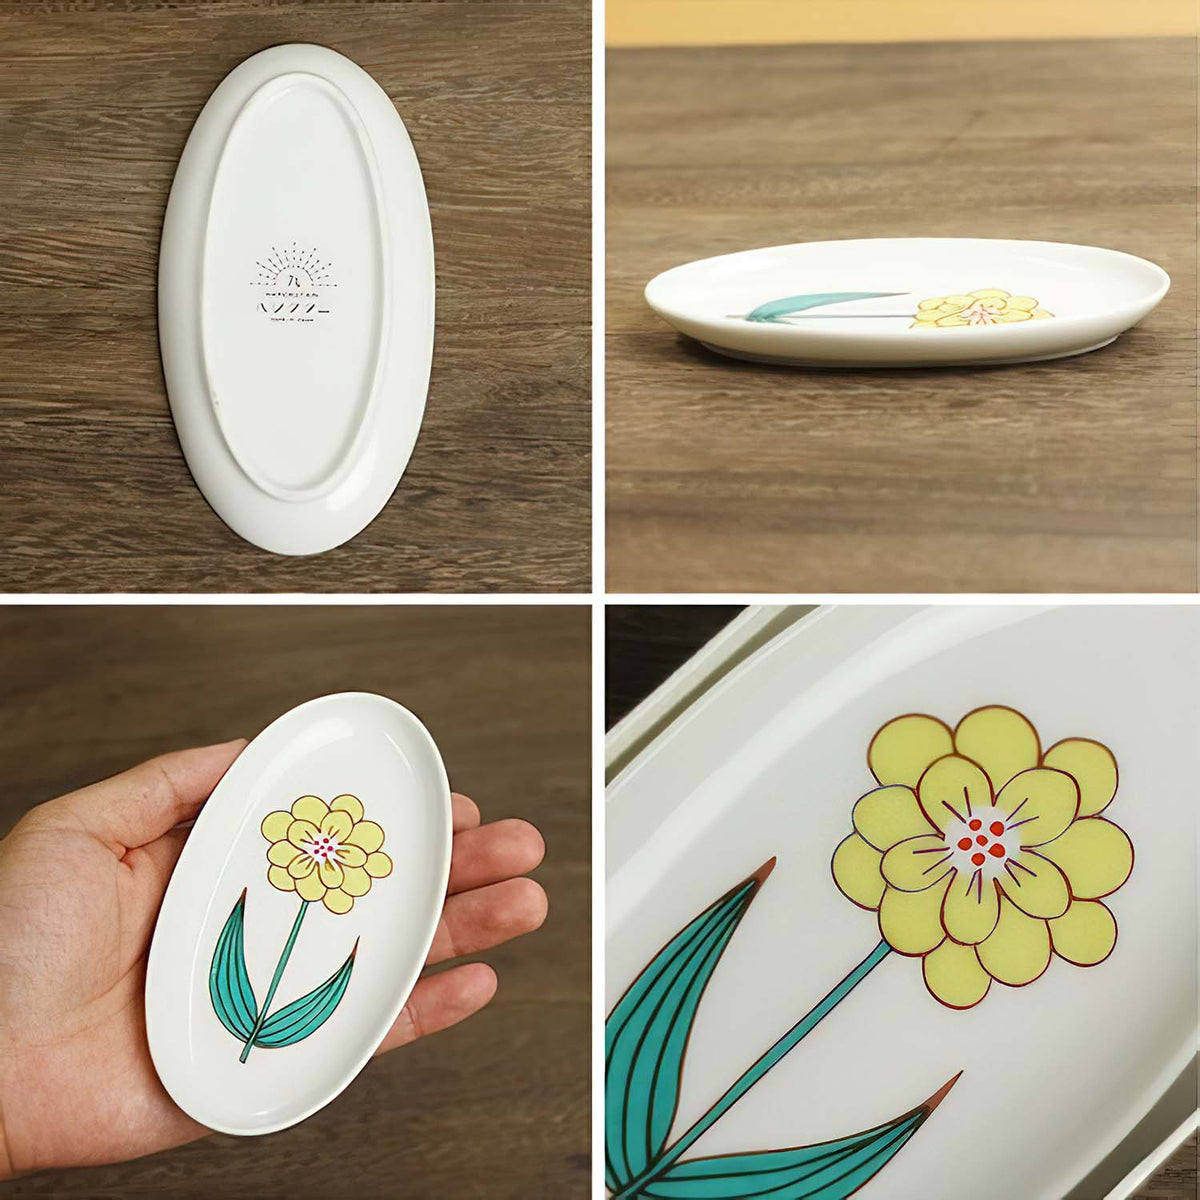 HAREKUTANI Porcelain Single Flower Small Oval Plate